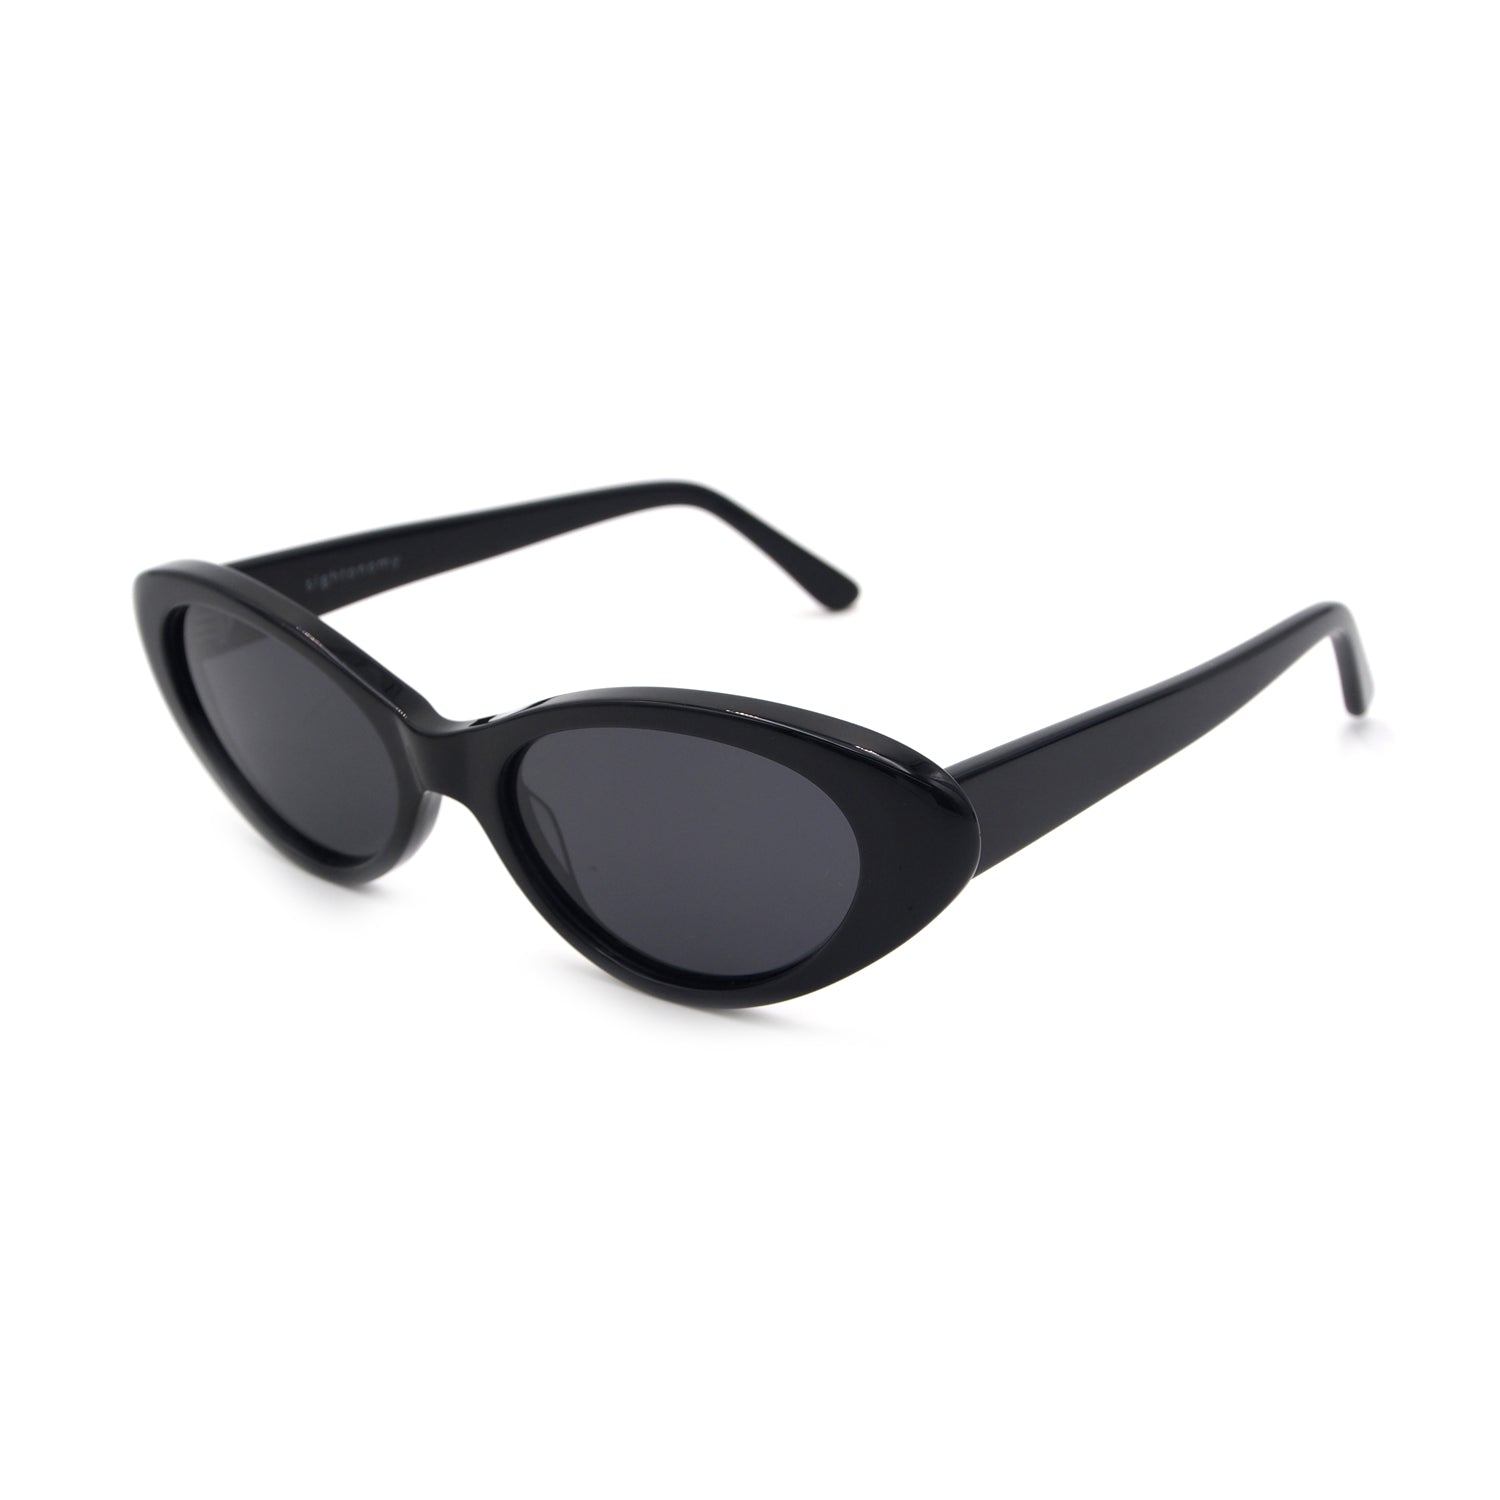 Devon in Mondo Black Sunglasses - sightonomy